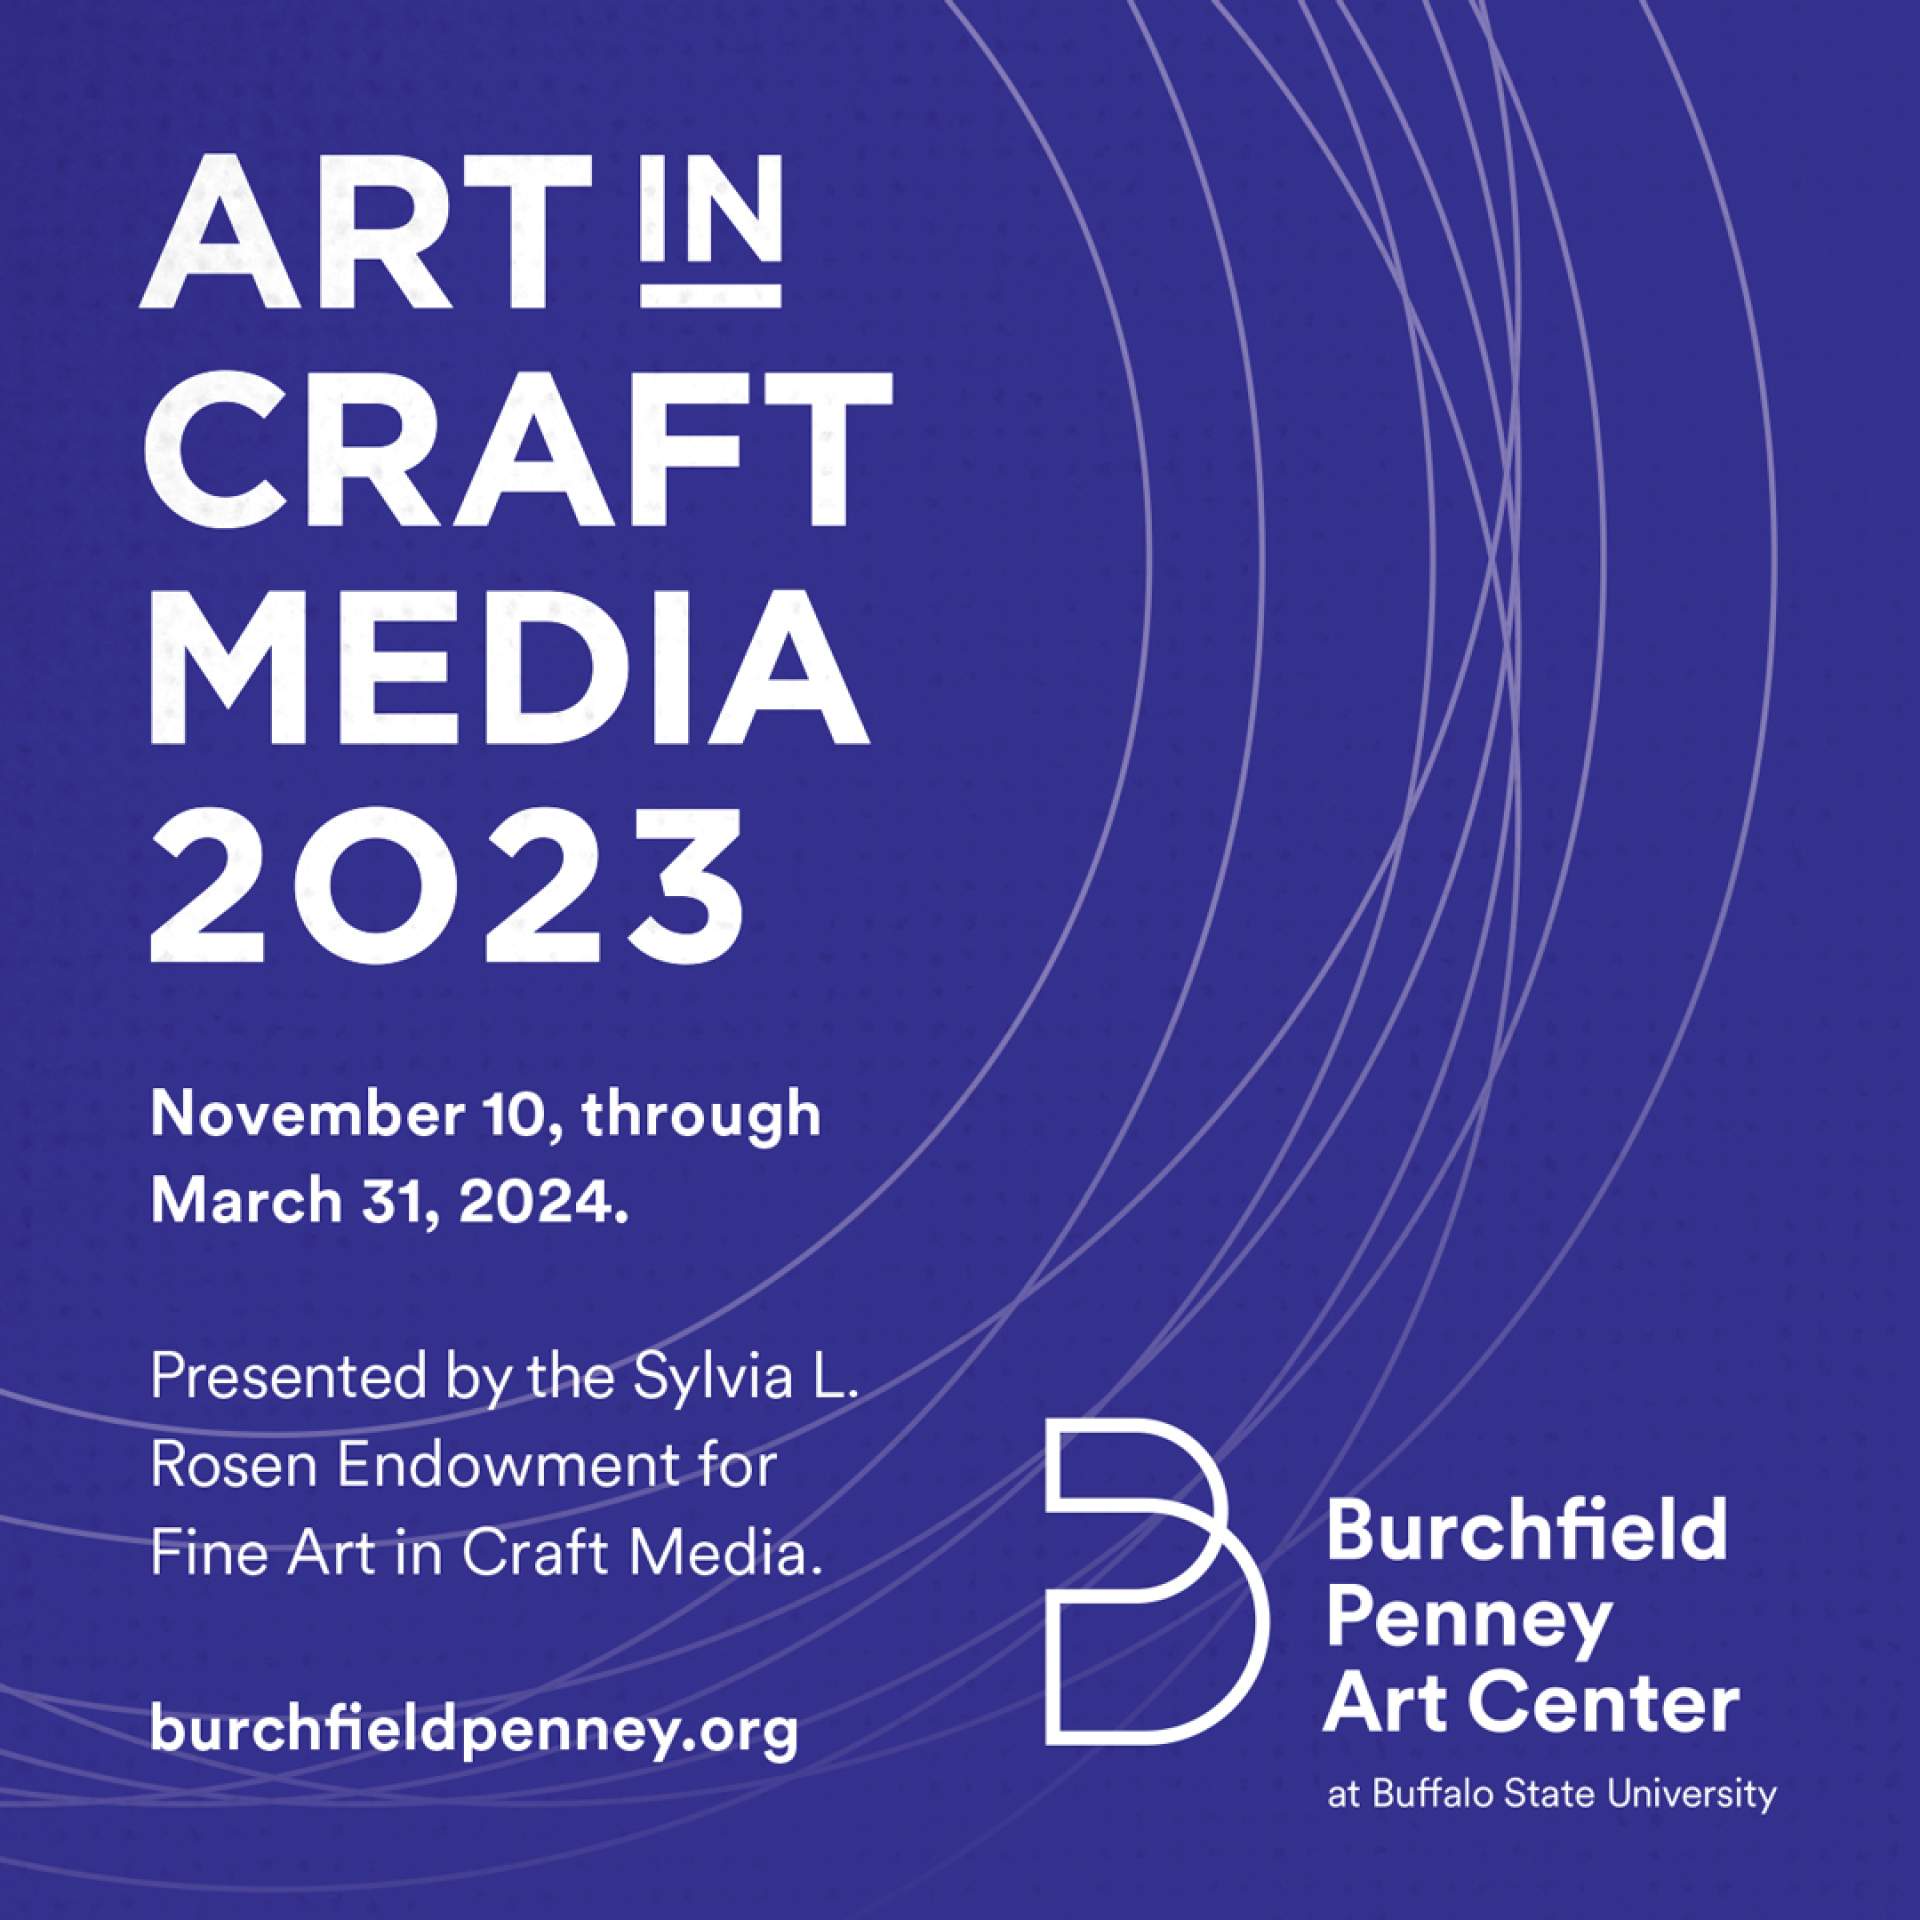 Burchfield Penney Art Center Presents Art in Craft Media 2023 